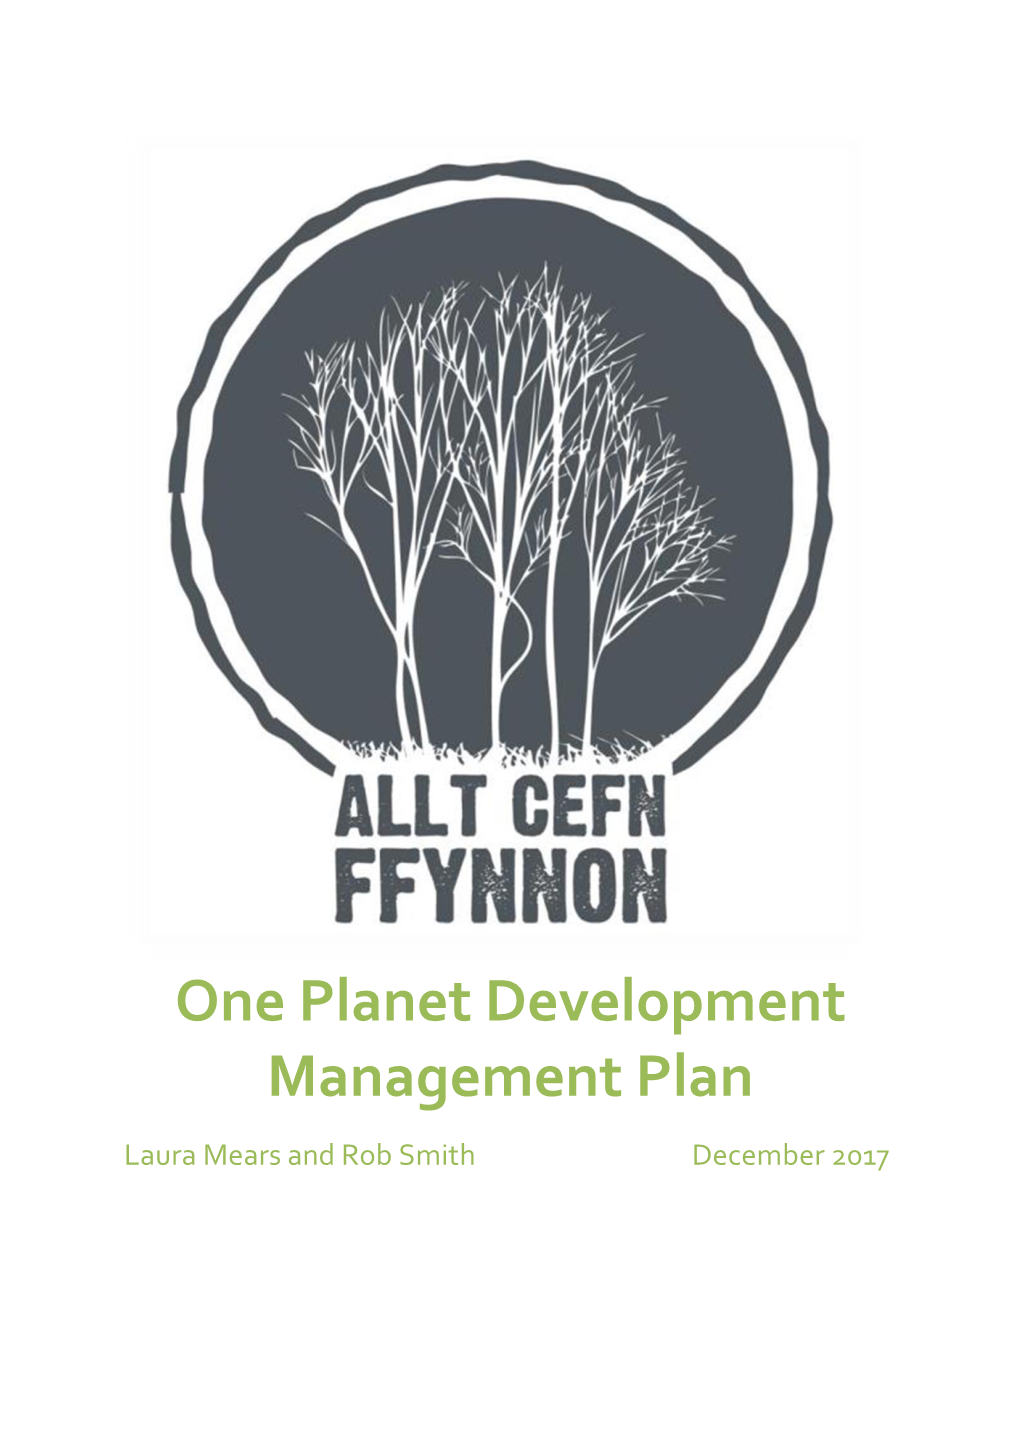 One Planet Development Management Plan